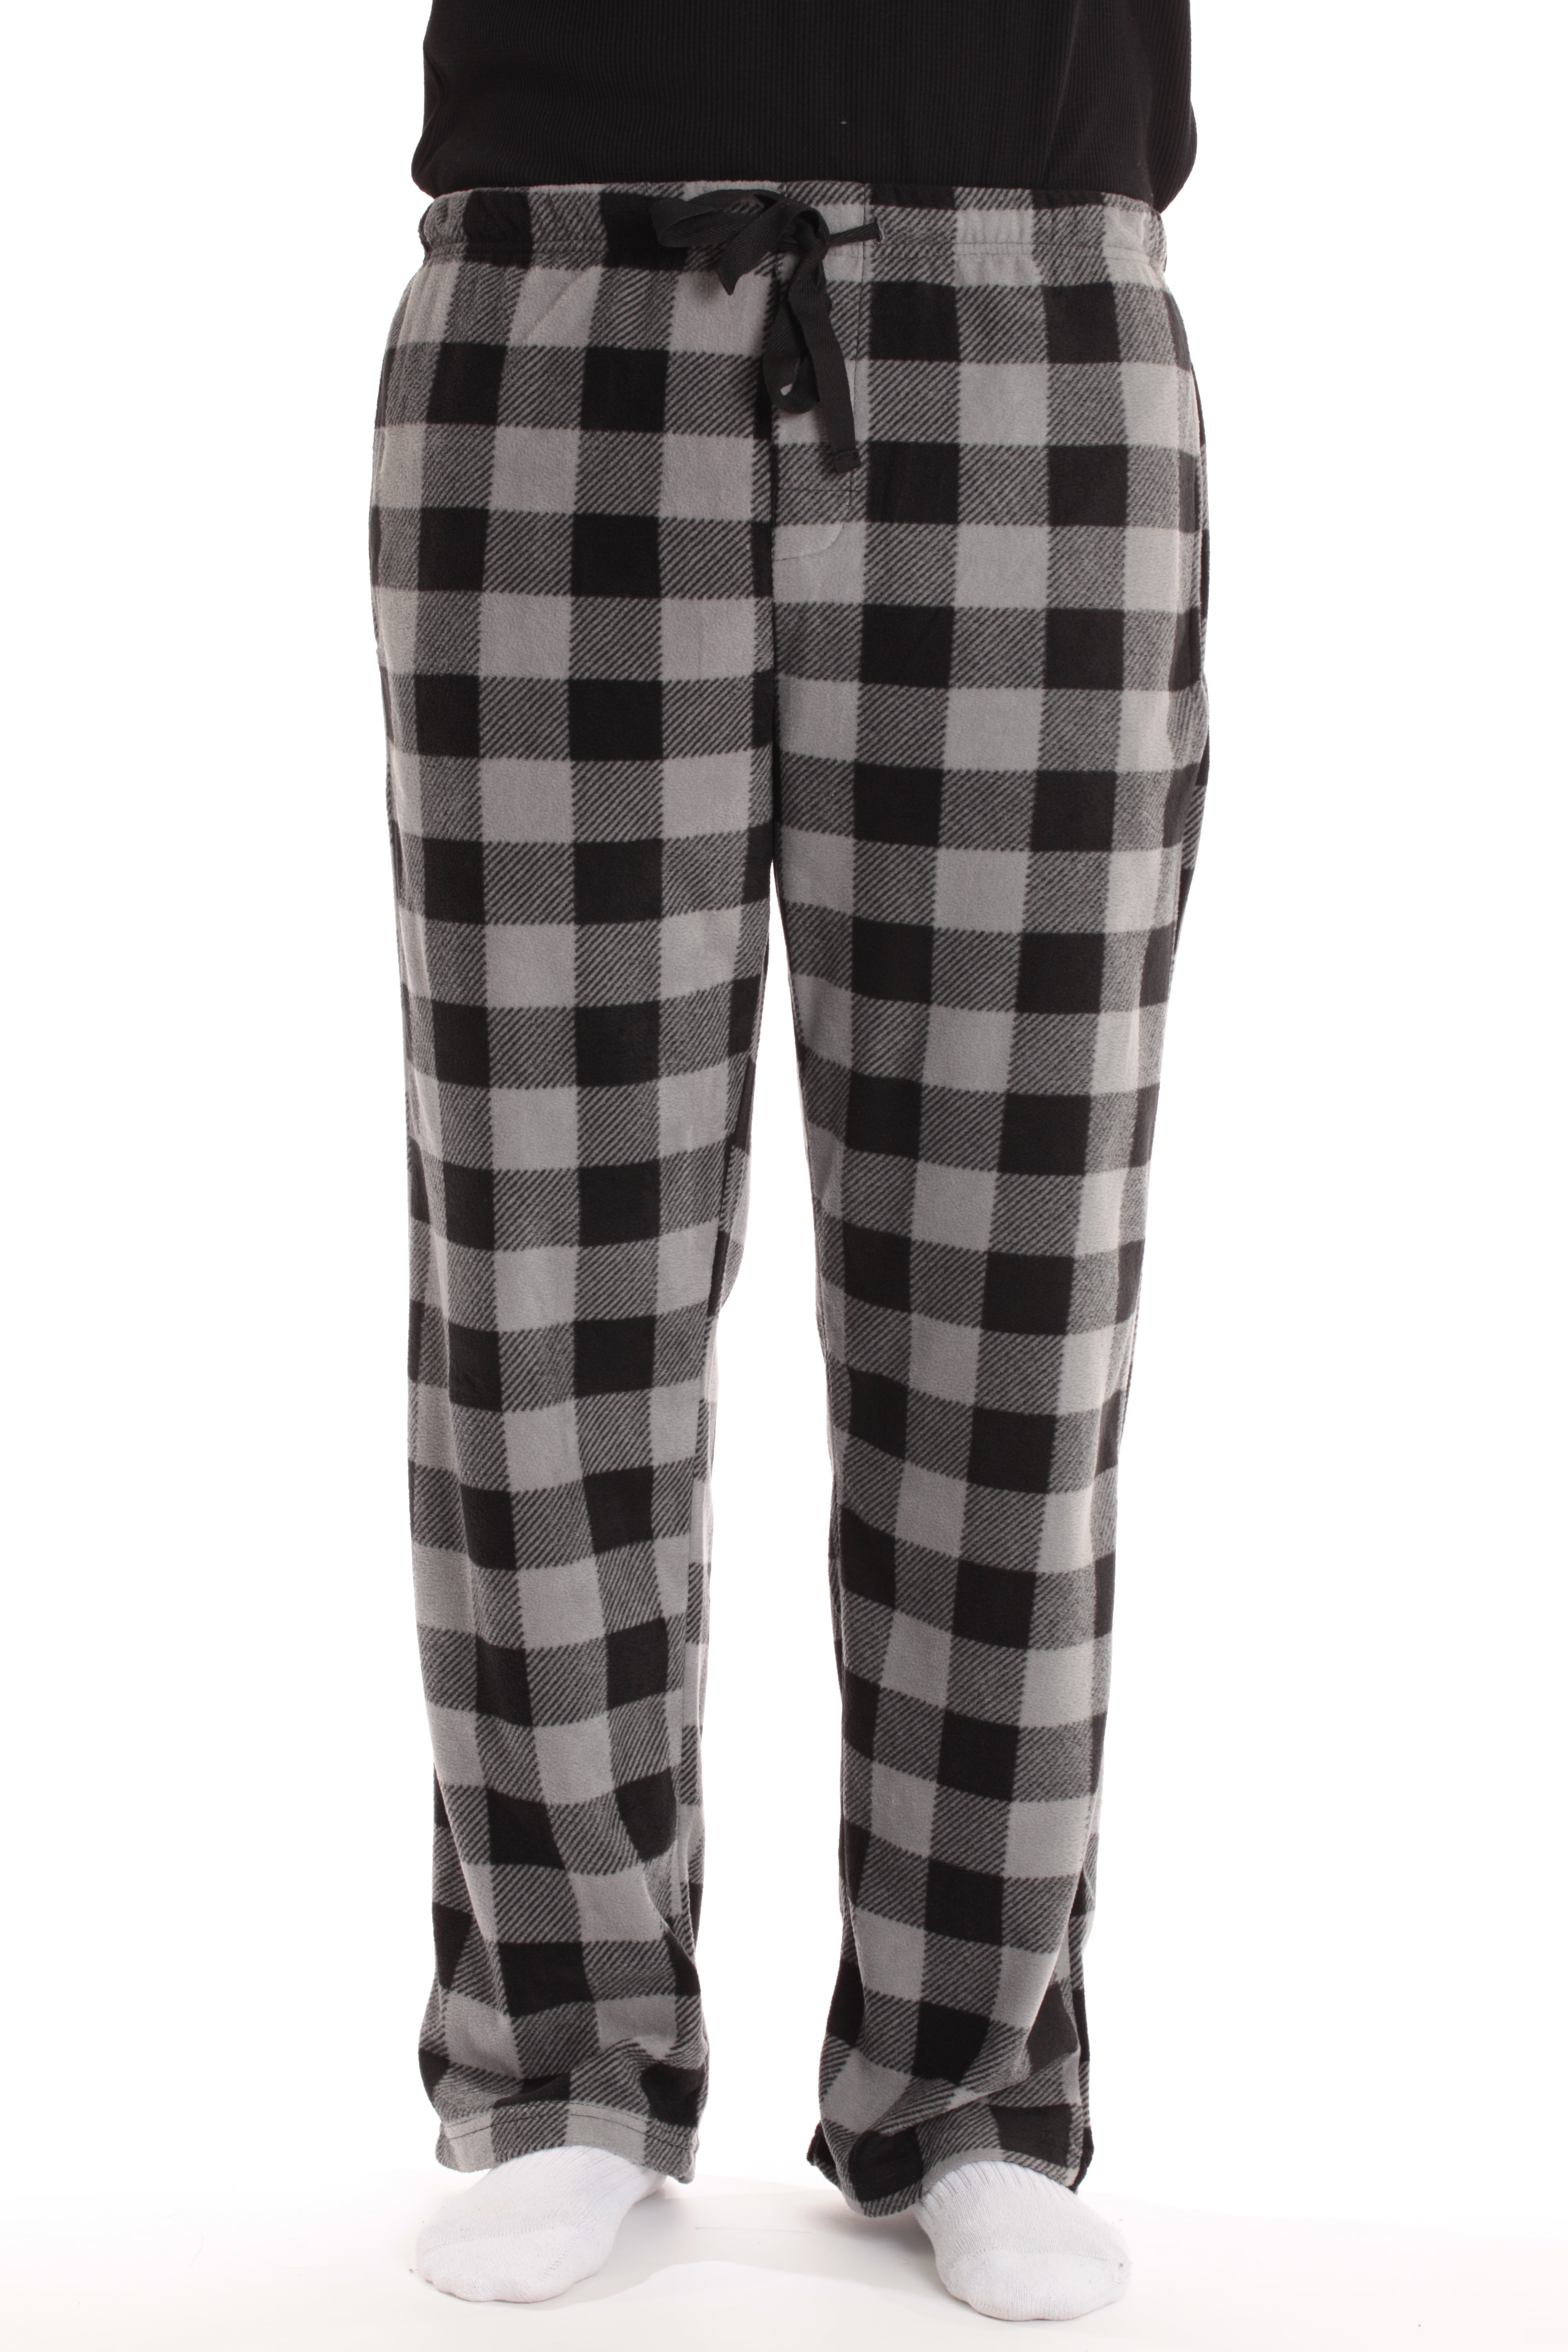 Followme - #FollowMe Microfleece Mens Pajama Pants with Pockets (Grey ...